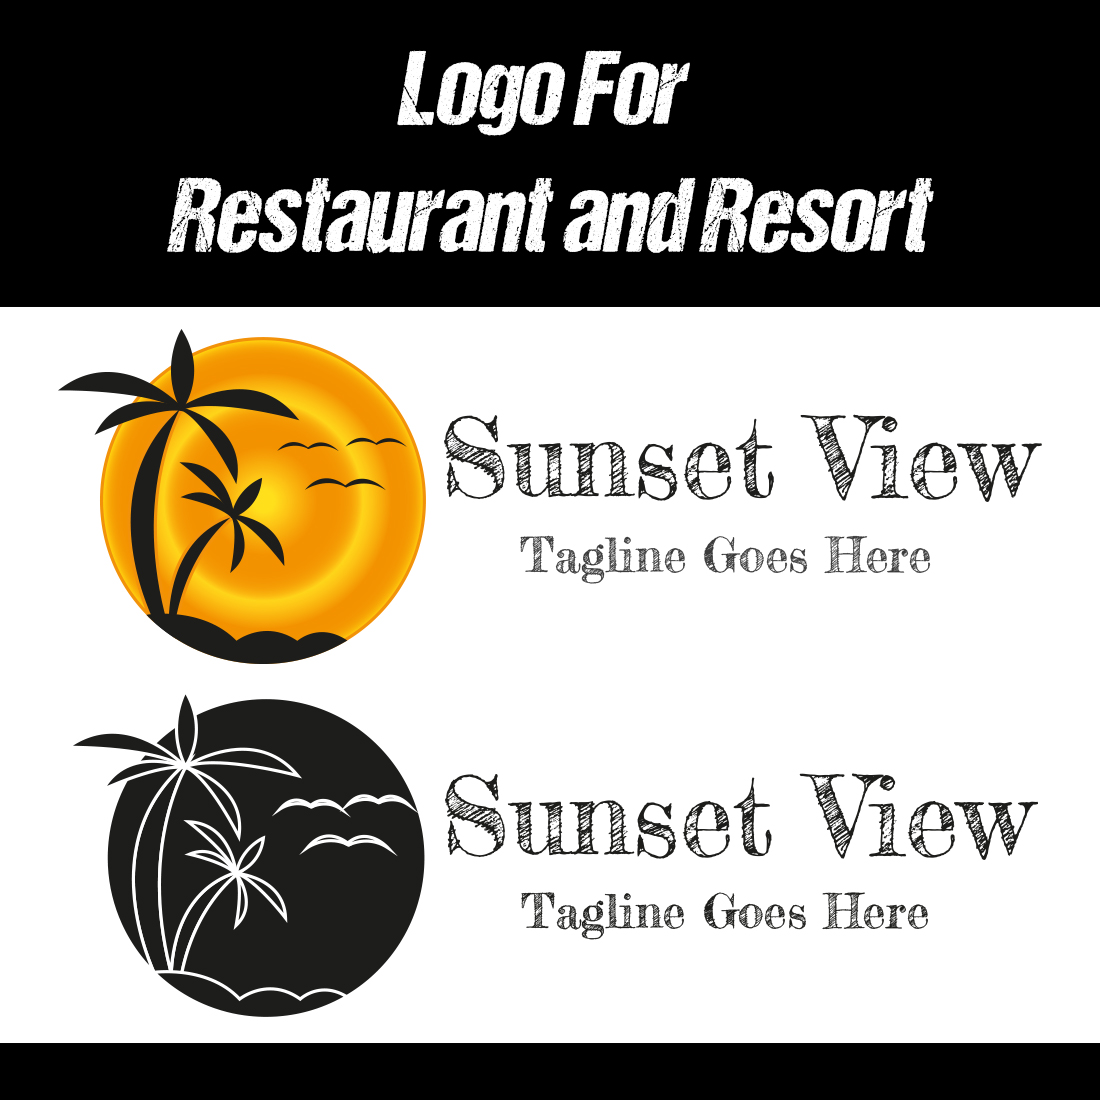 Creative Restaurant and Resort Logo - main image preview.